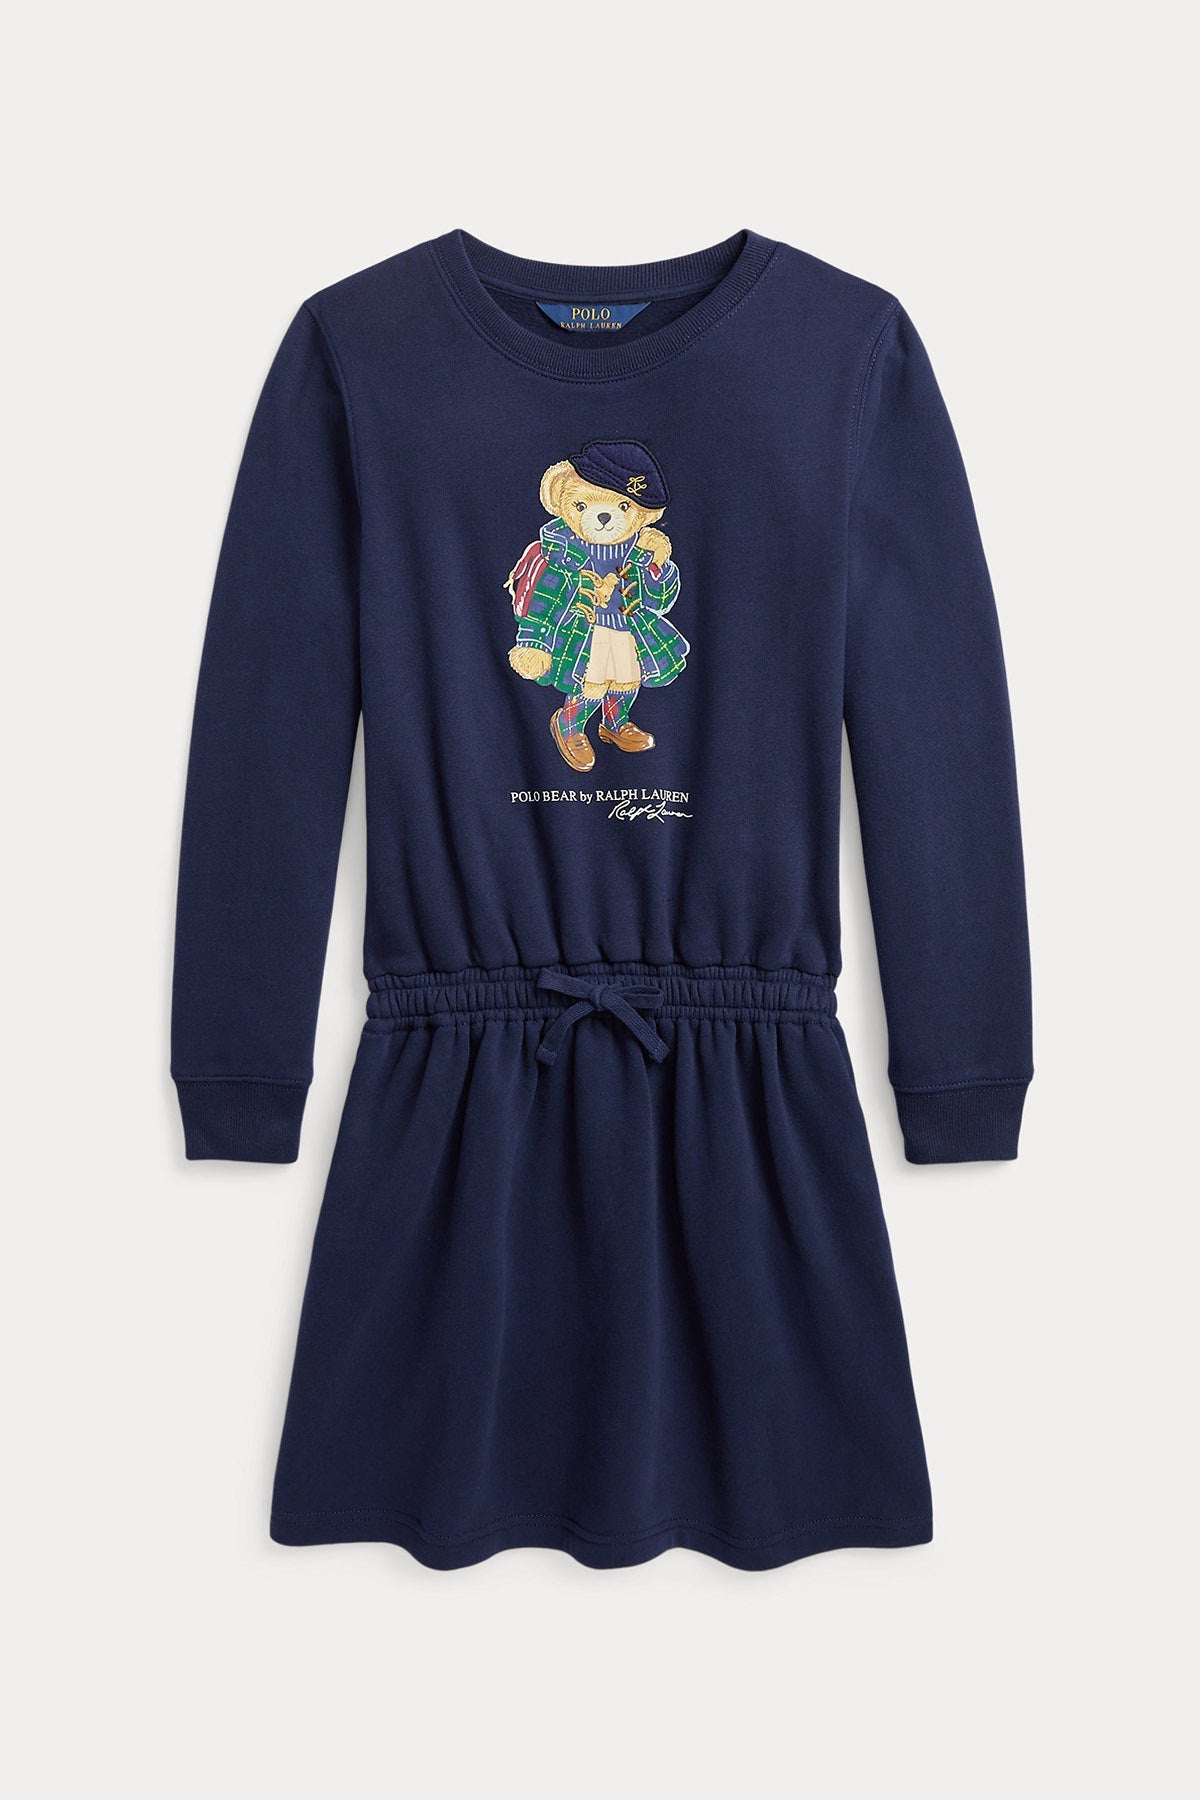 Polo Ralph Lauren Kids S-M Beden Kız Çocuk Polo Bear Sweatshirt Elbise